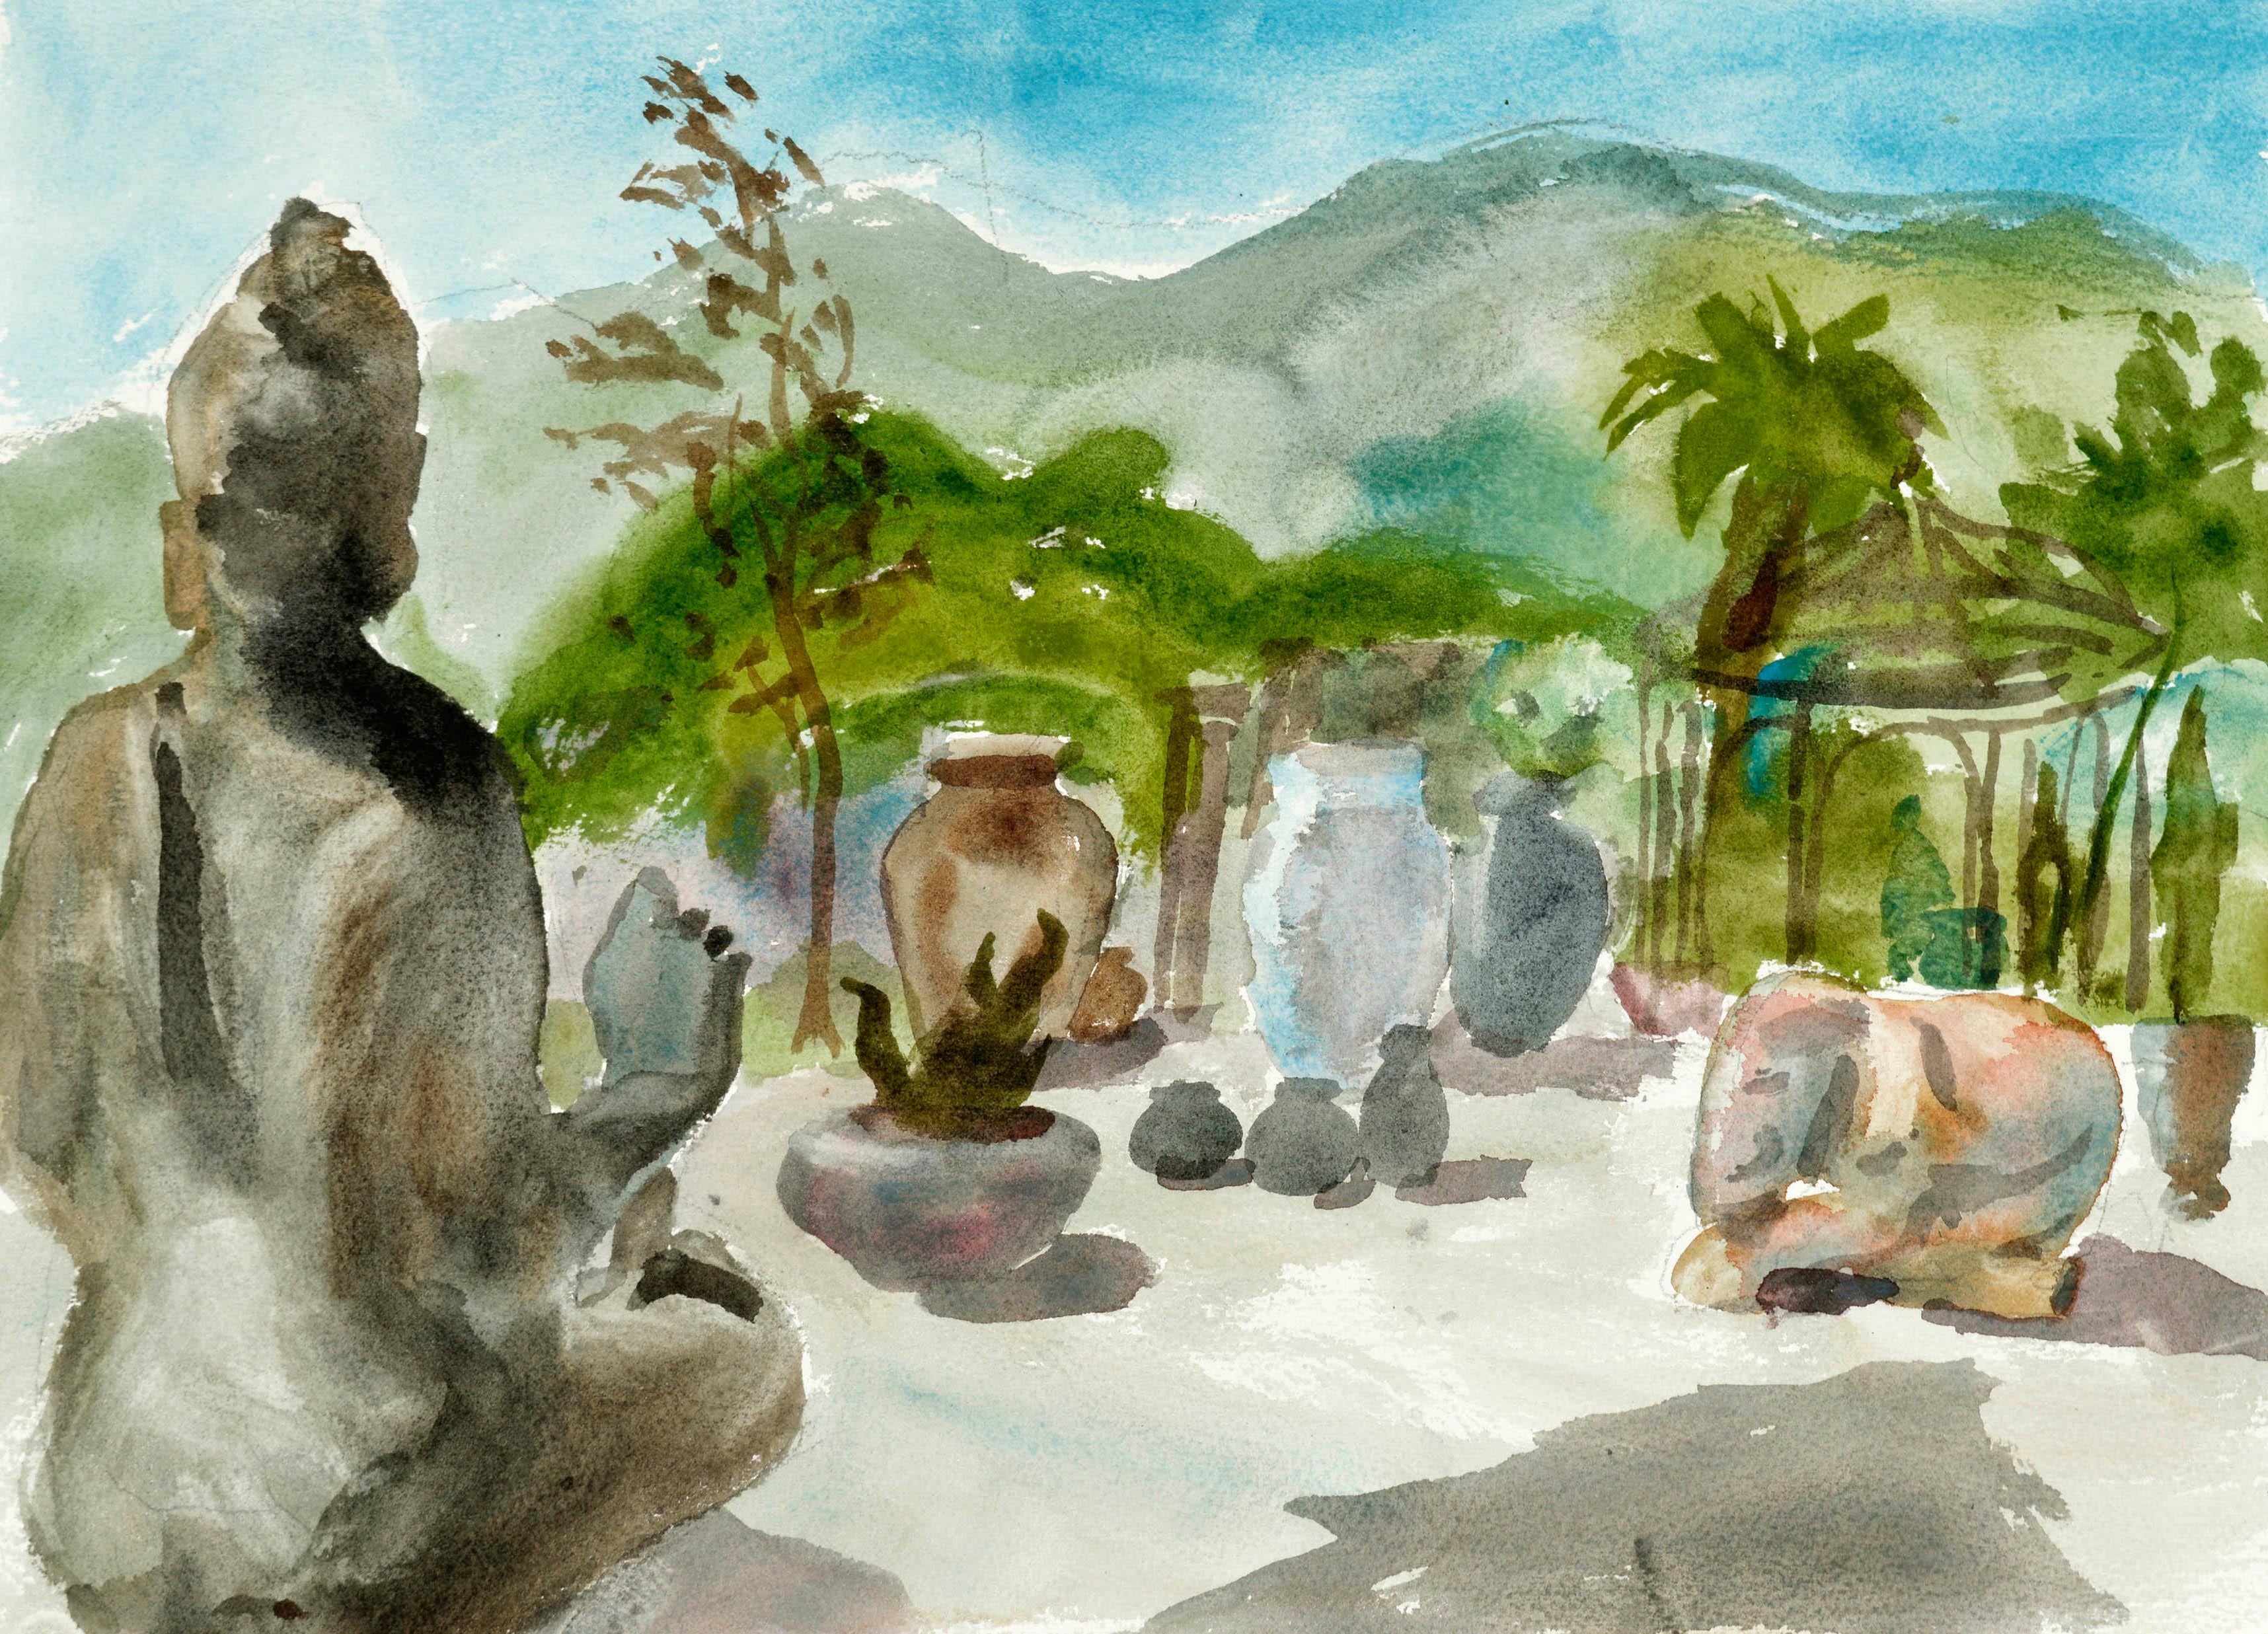 Zen Garden, Figurative Landscape with Buddah Sculpture & Plants